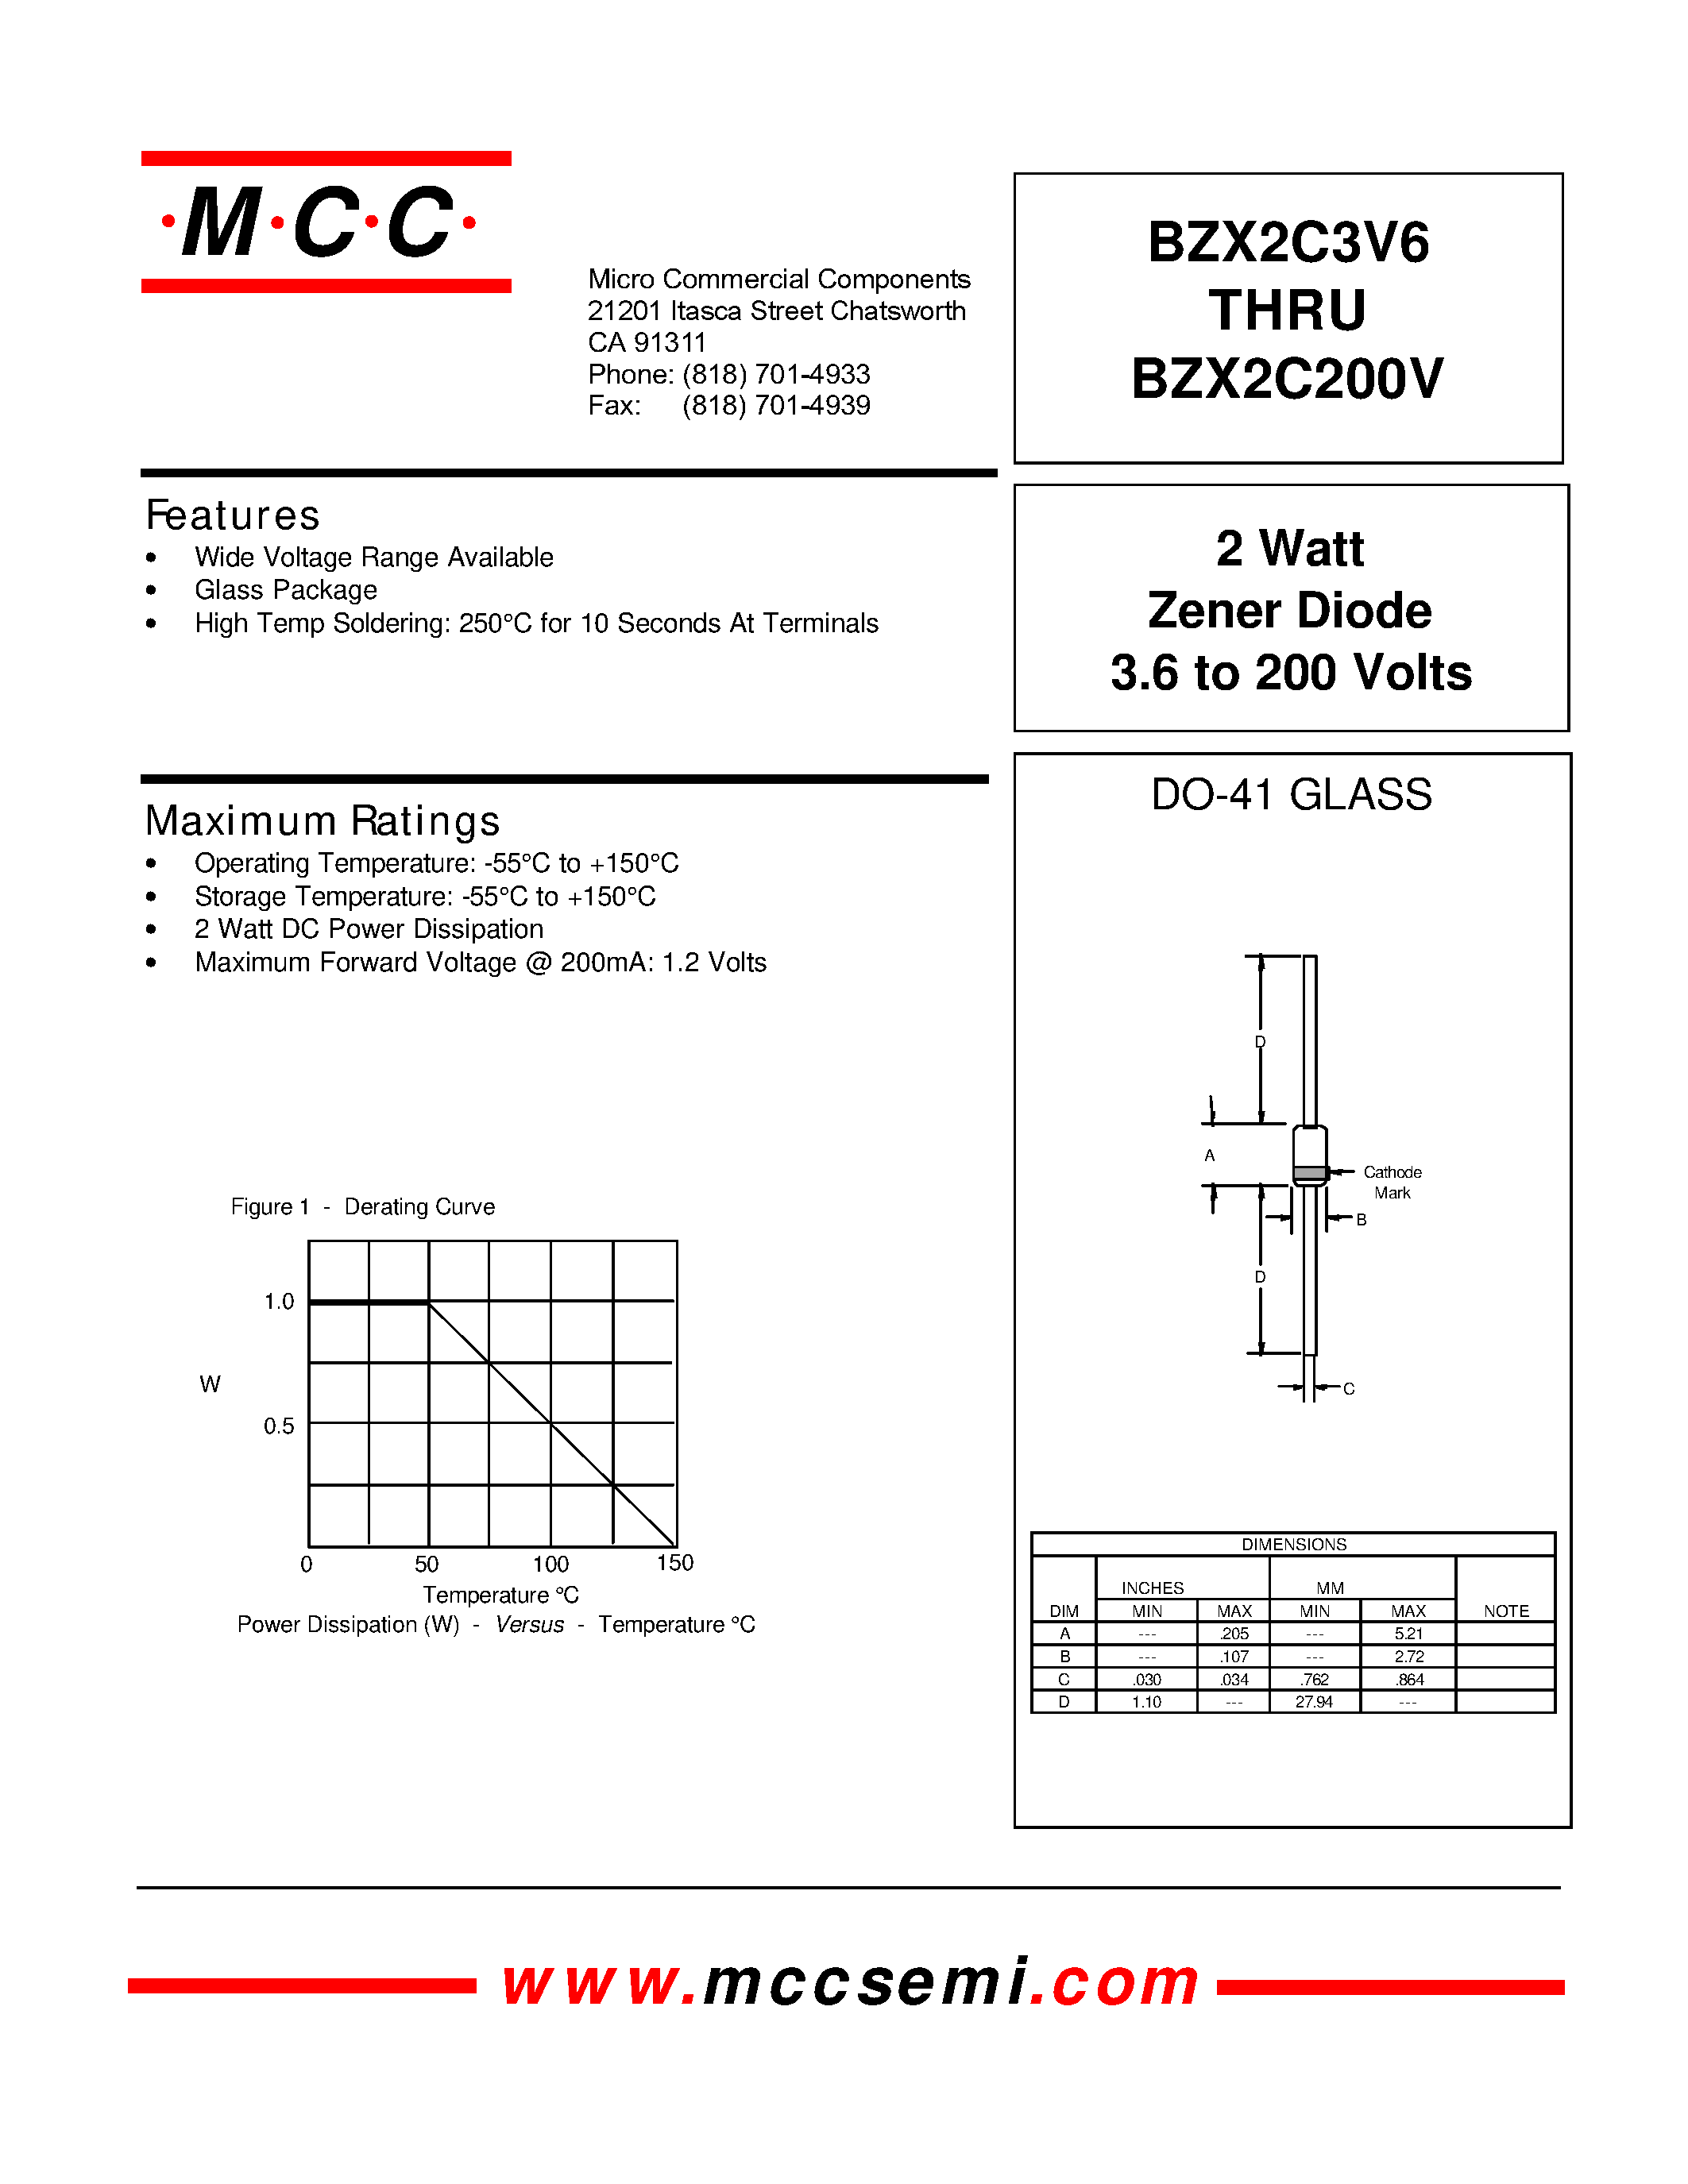 Datasheet BZX2C5V6 - 2 Watt Zener Diode 3.6 to 200 Volts page 1